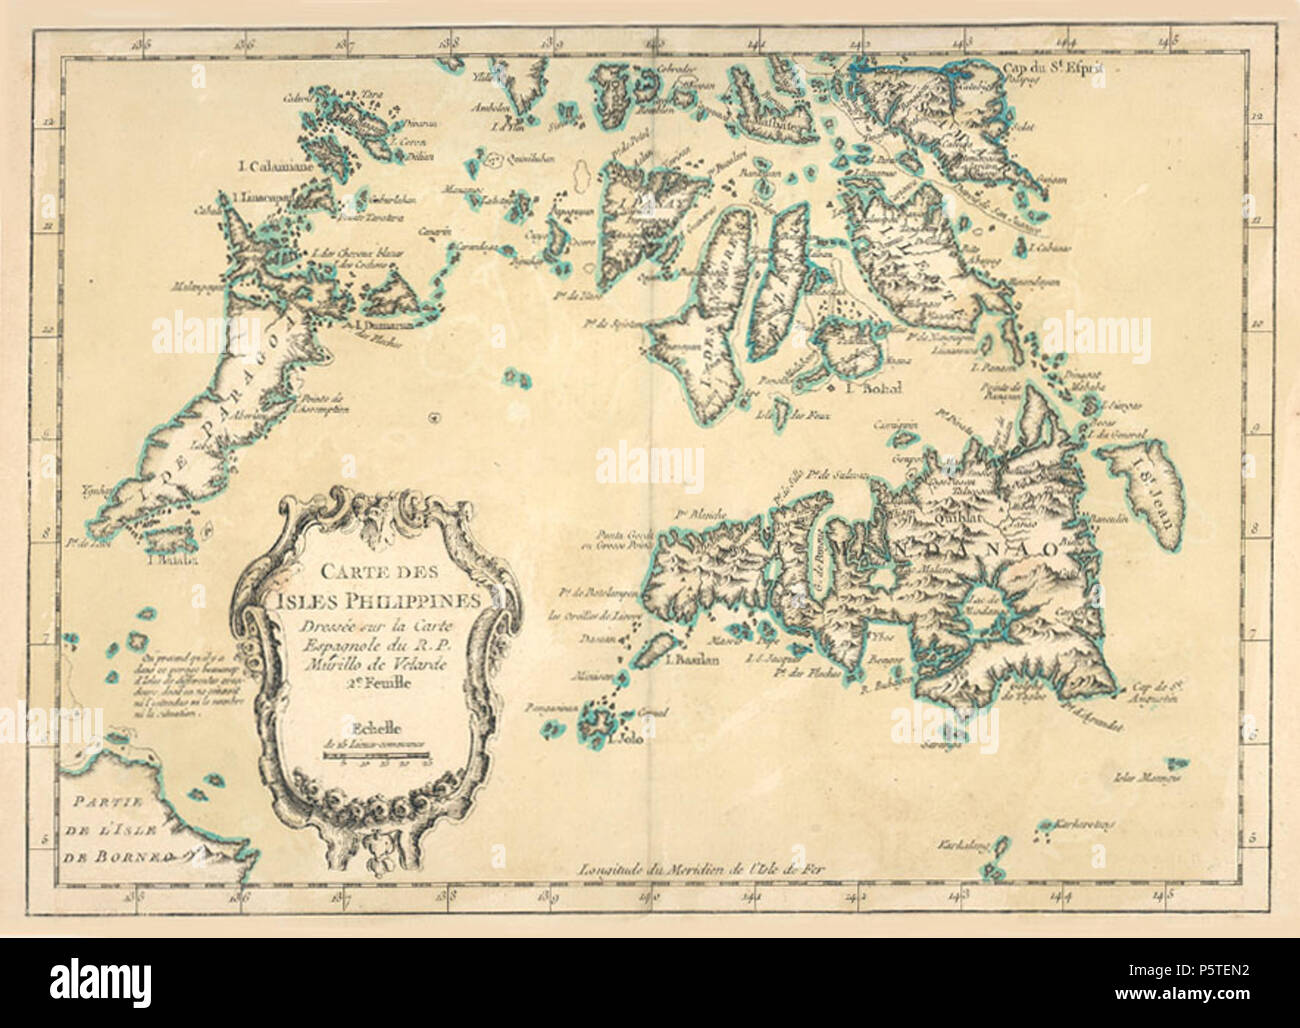 Na English Oldest Extant European Map Of Basilan Island 8 August 1764 Jjarivera 279 Cartephilippines1764 P5TEN2 